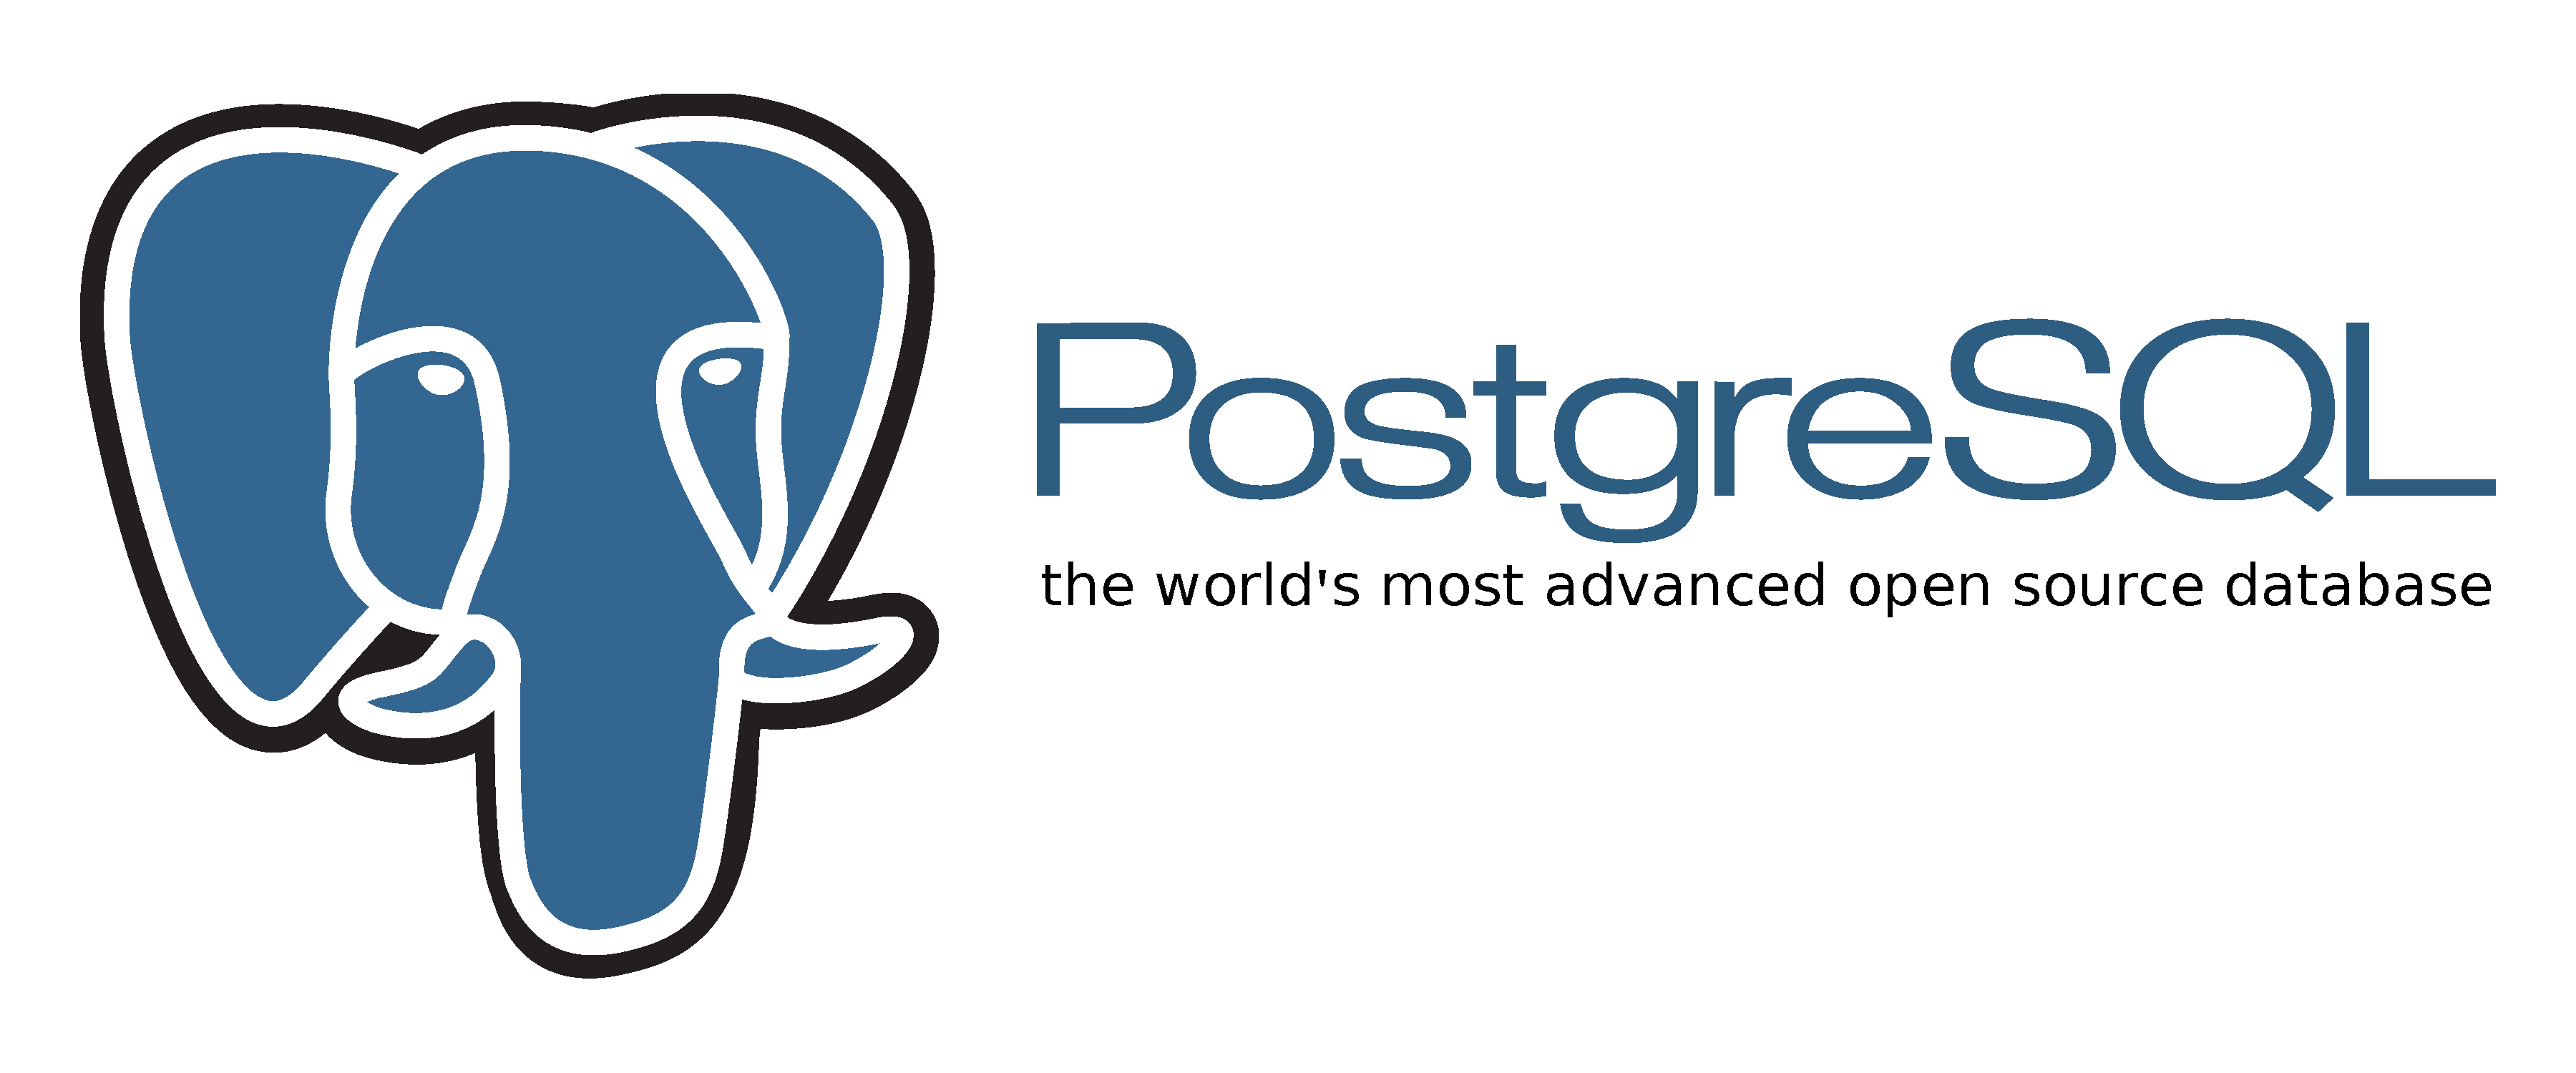 PostgreSQL Note